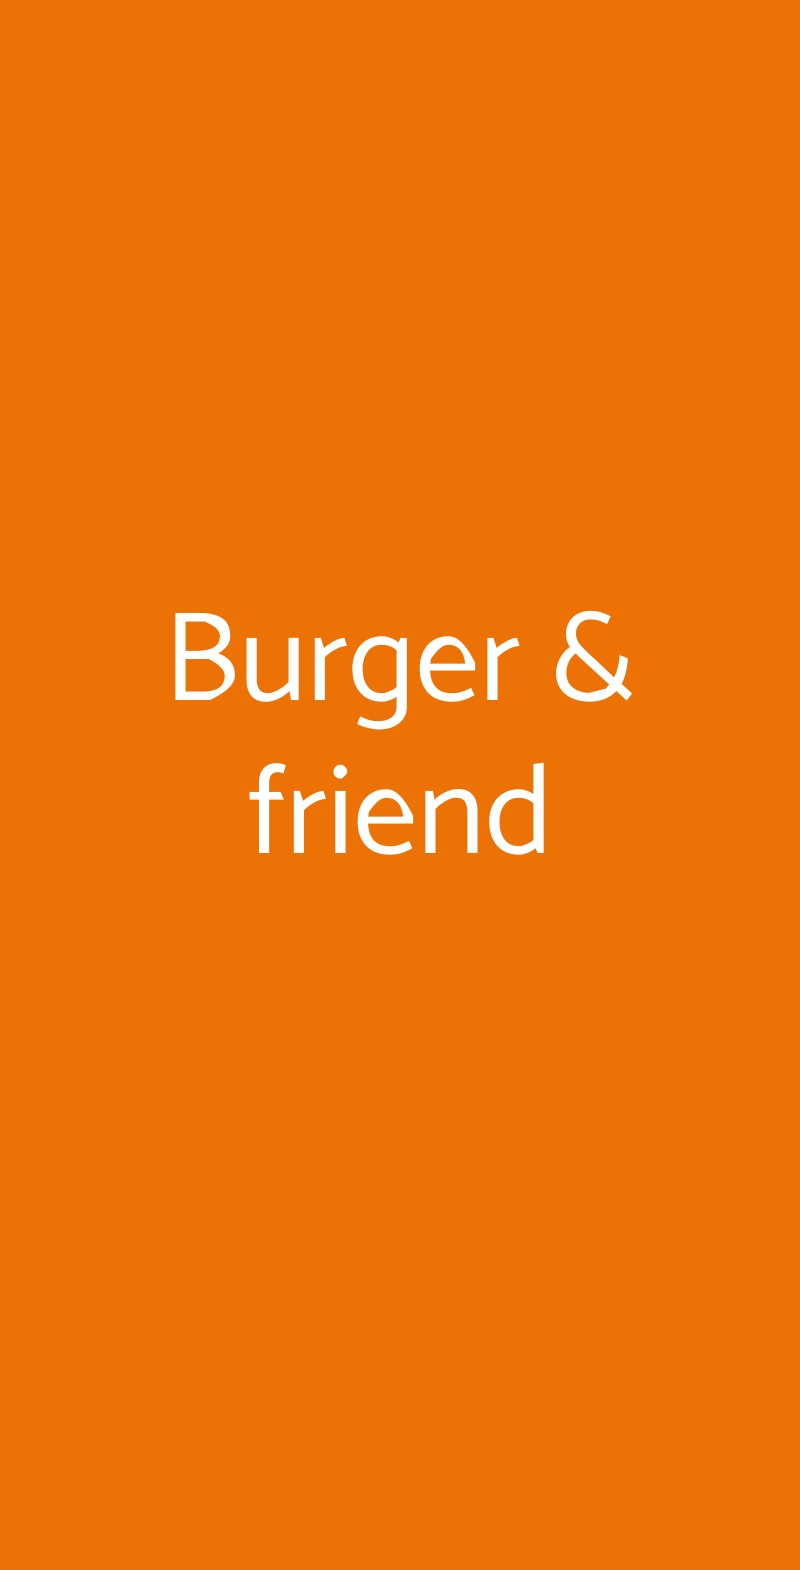 Burger & friend Catanzaro menù 1 pagina